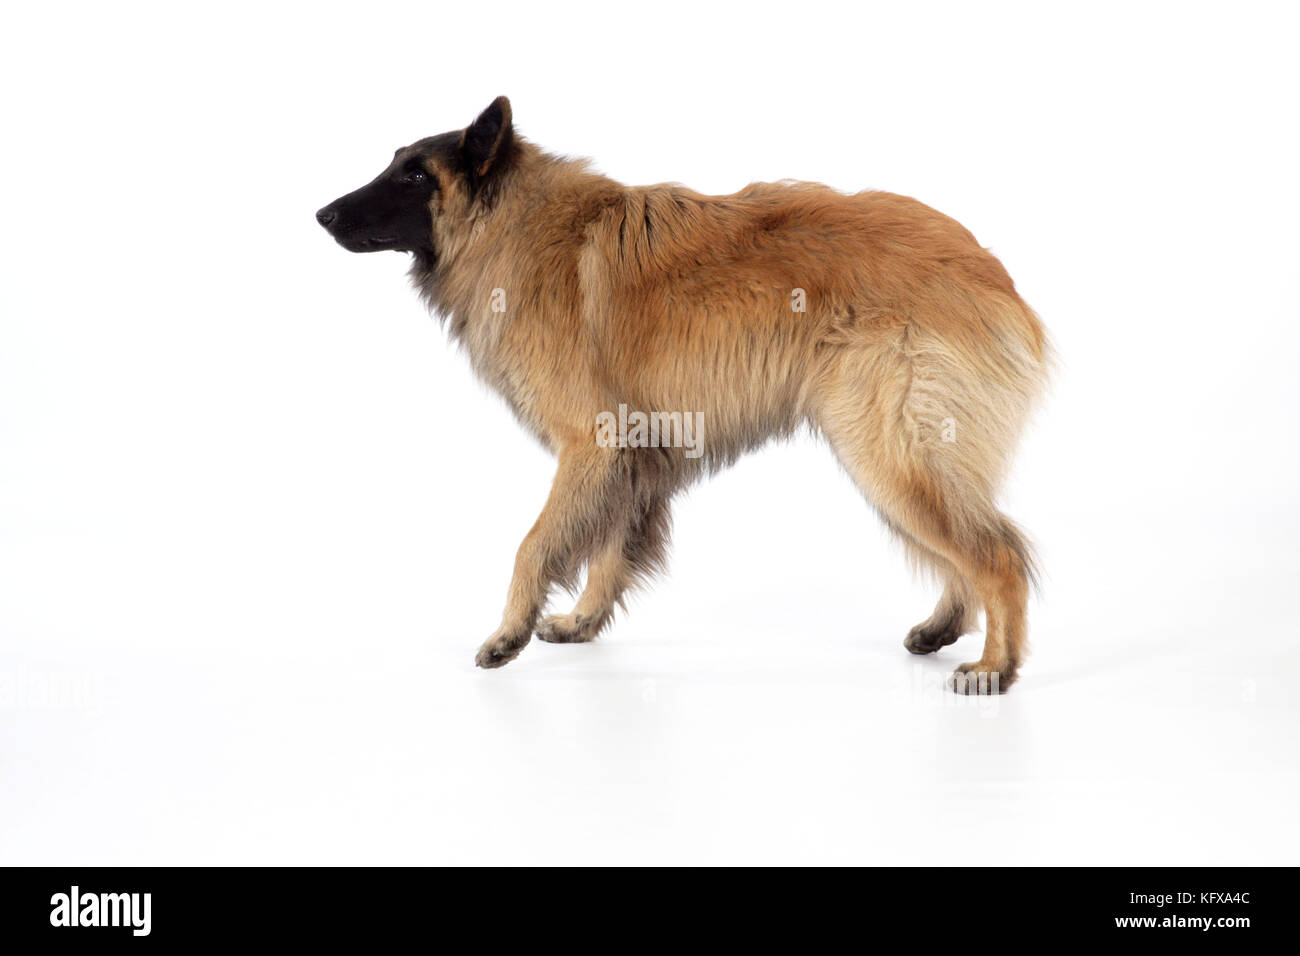 DOG Posture. Fearful Stock Photo